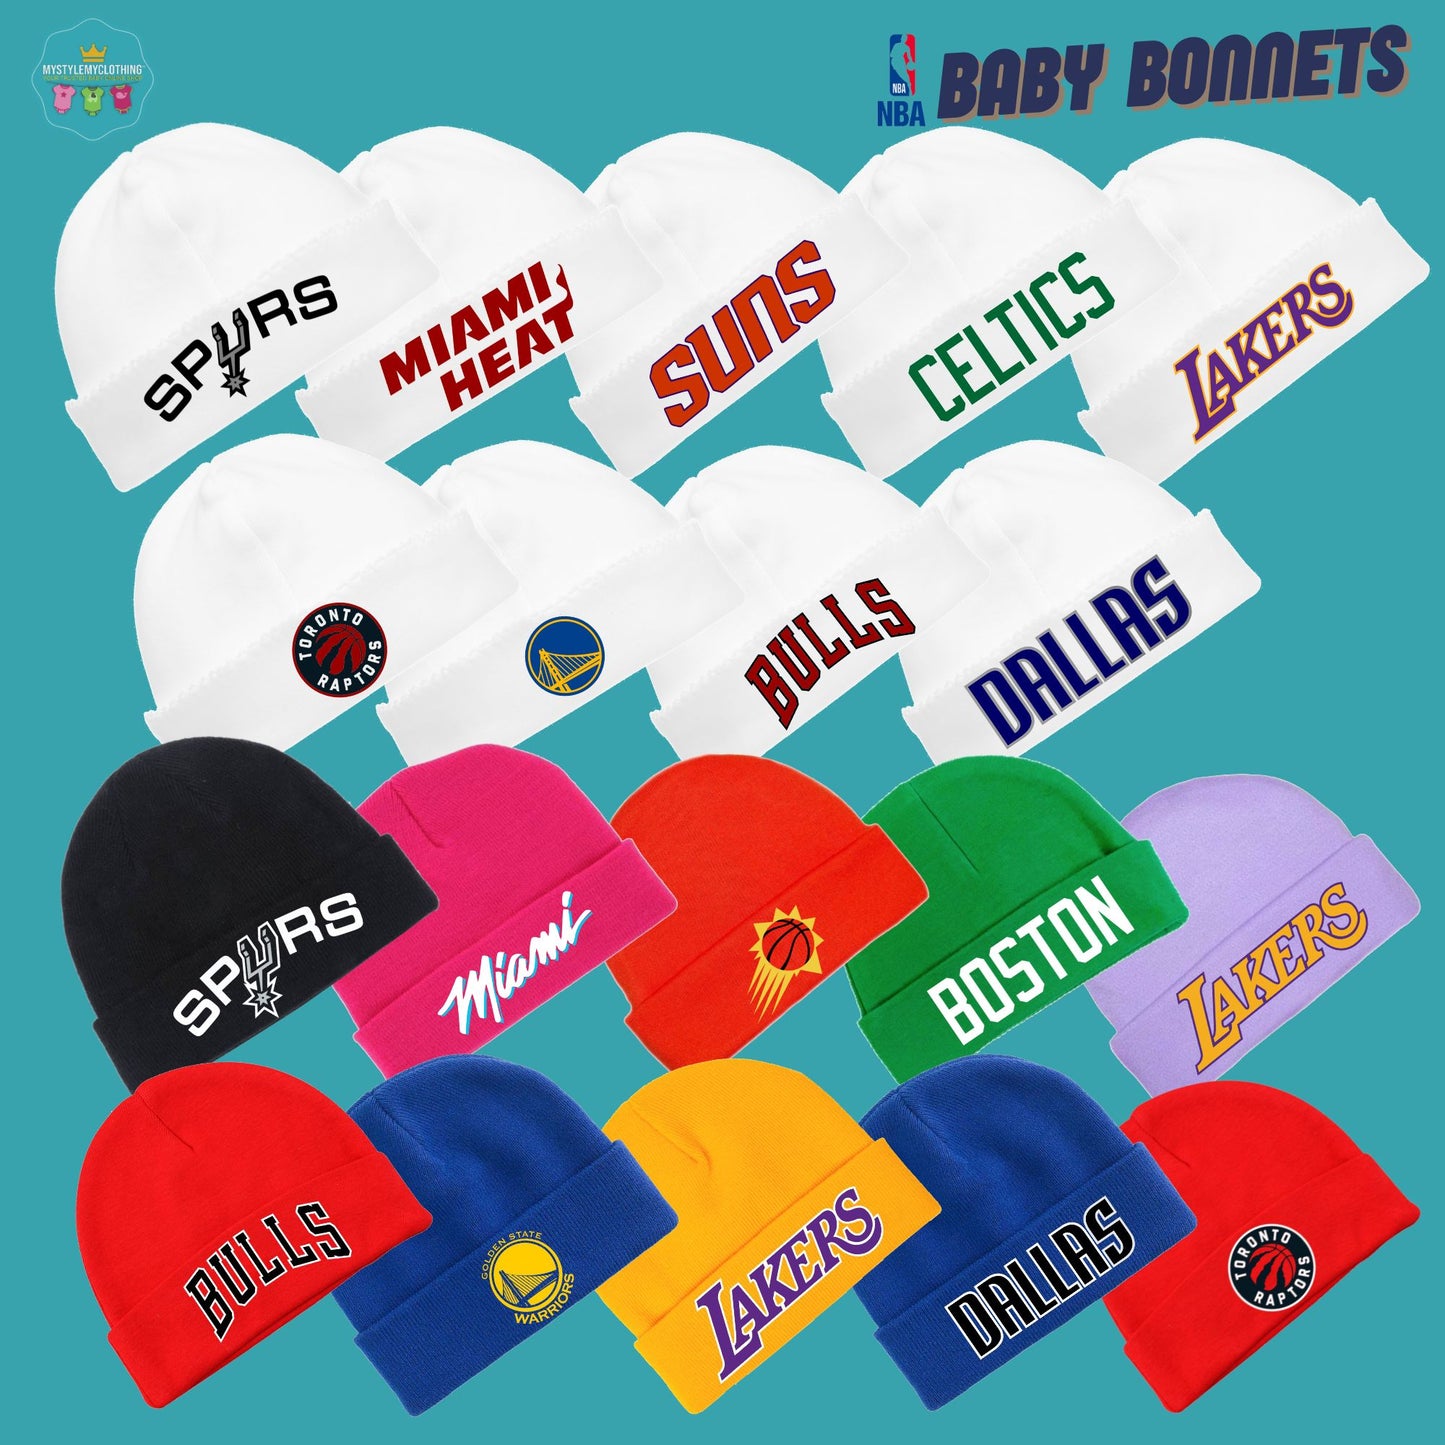 Baby Basketball Bonnets - Dallas